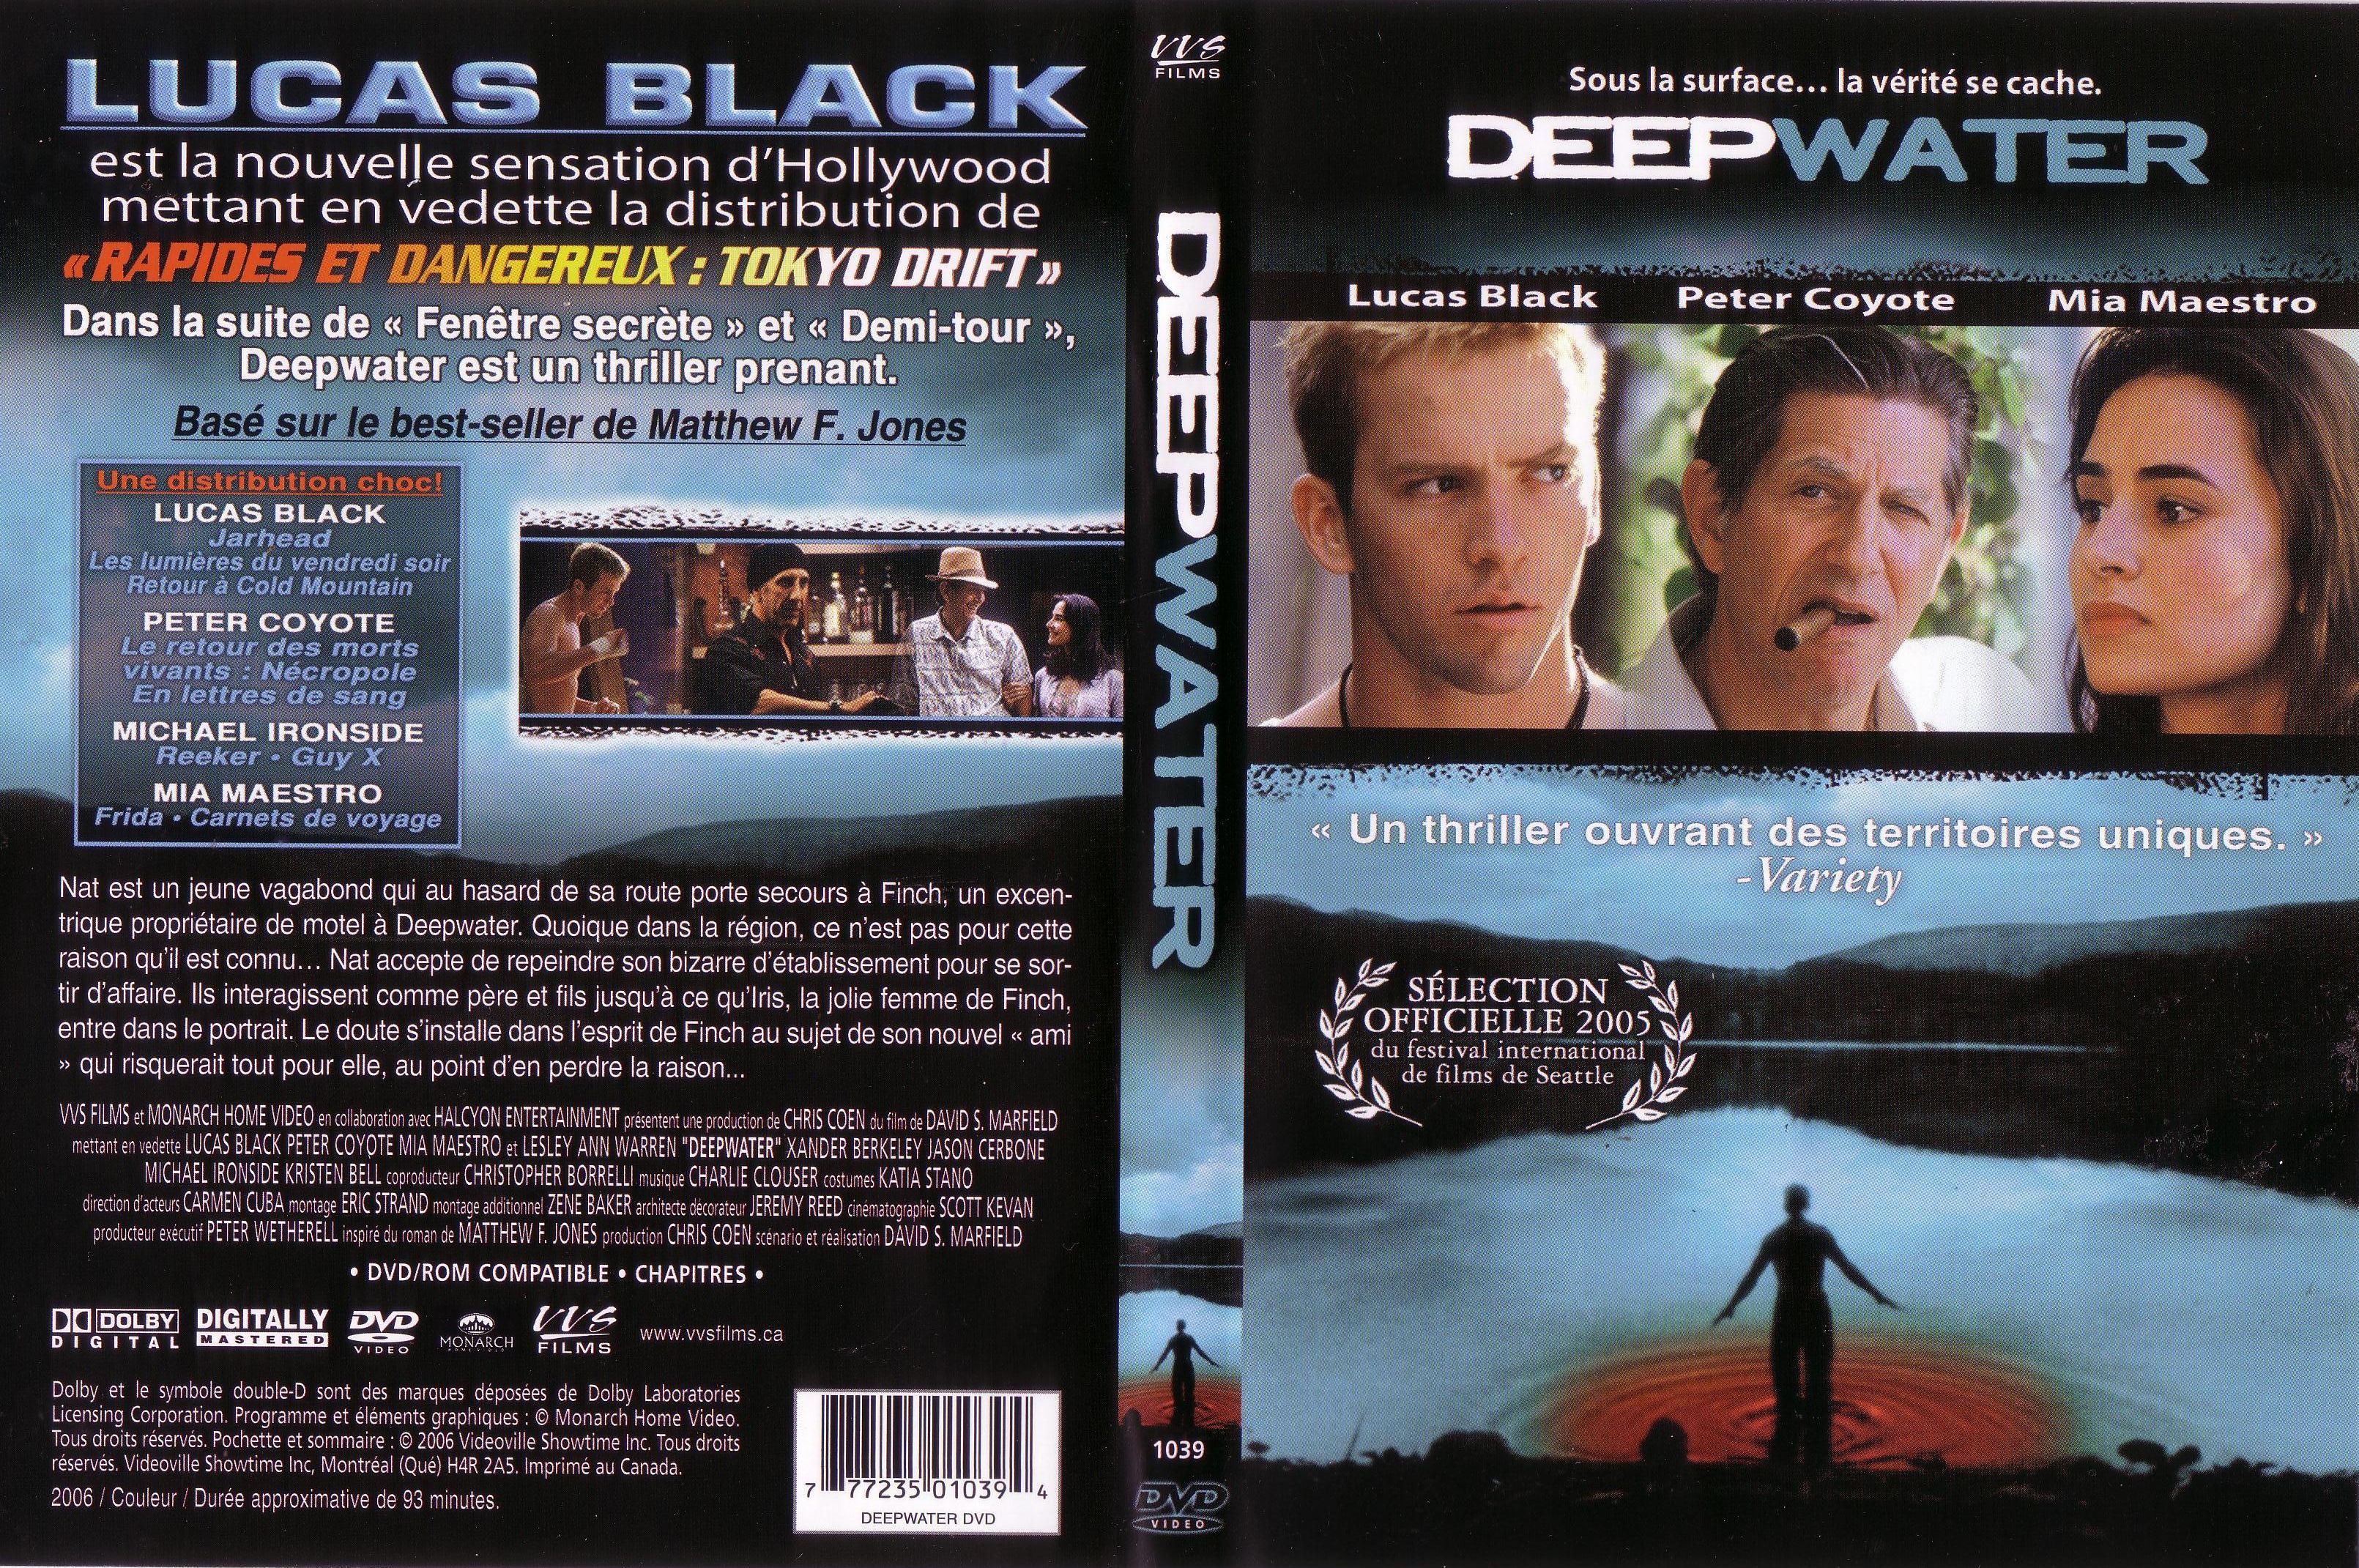 Jaquette DVD Deep water v2